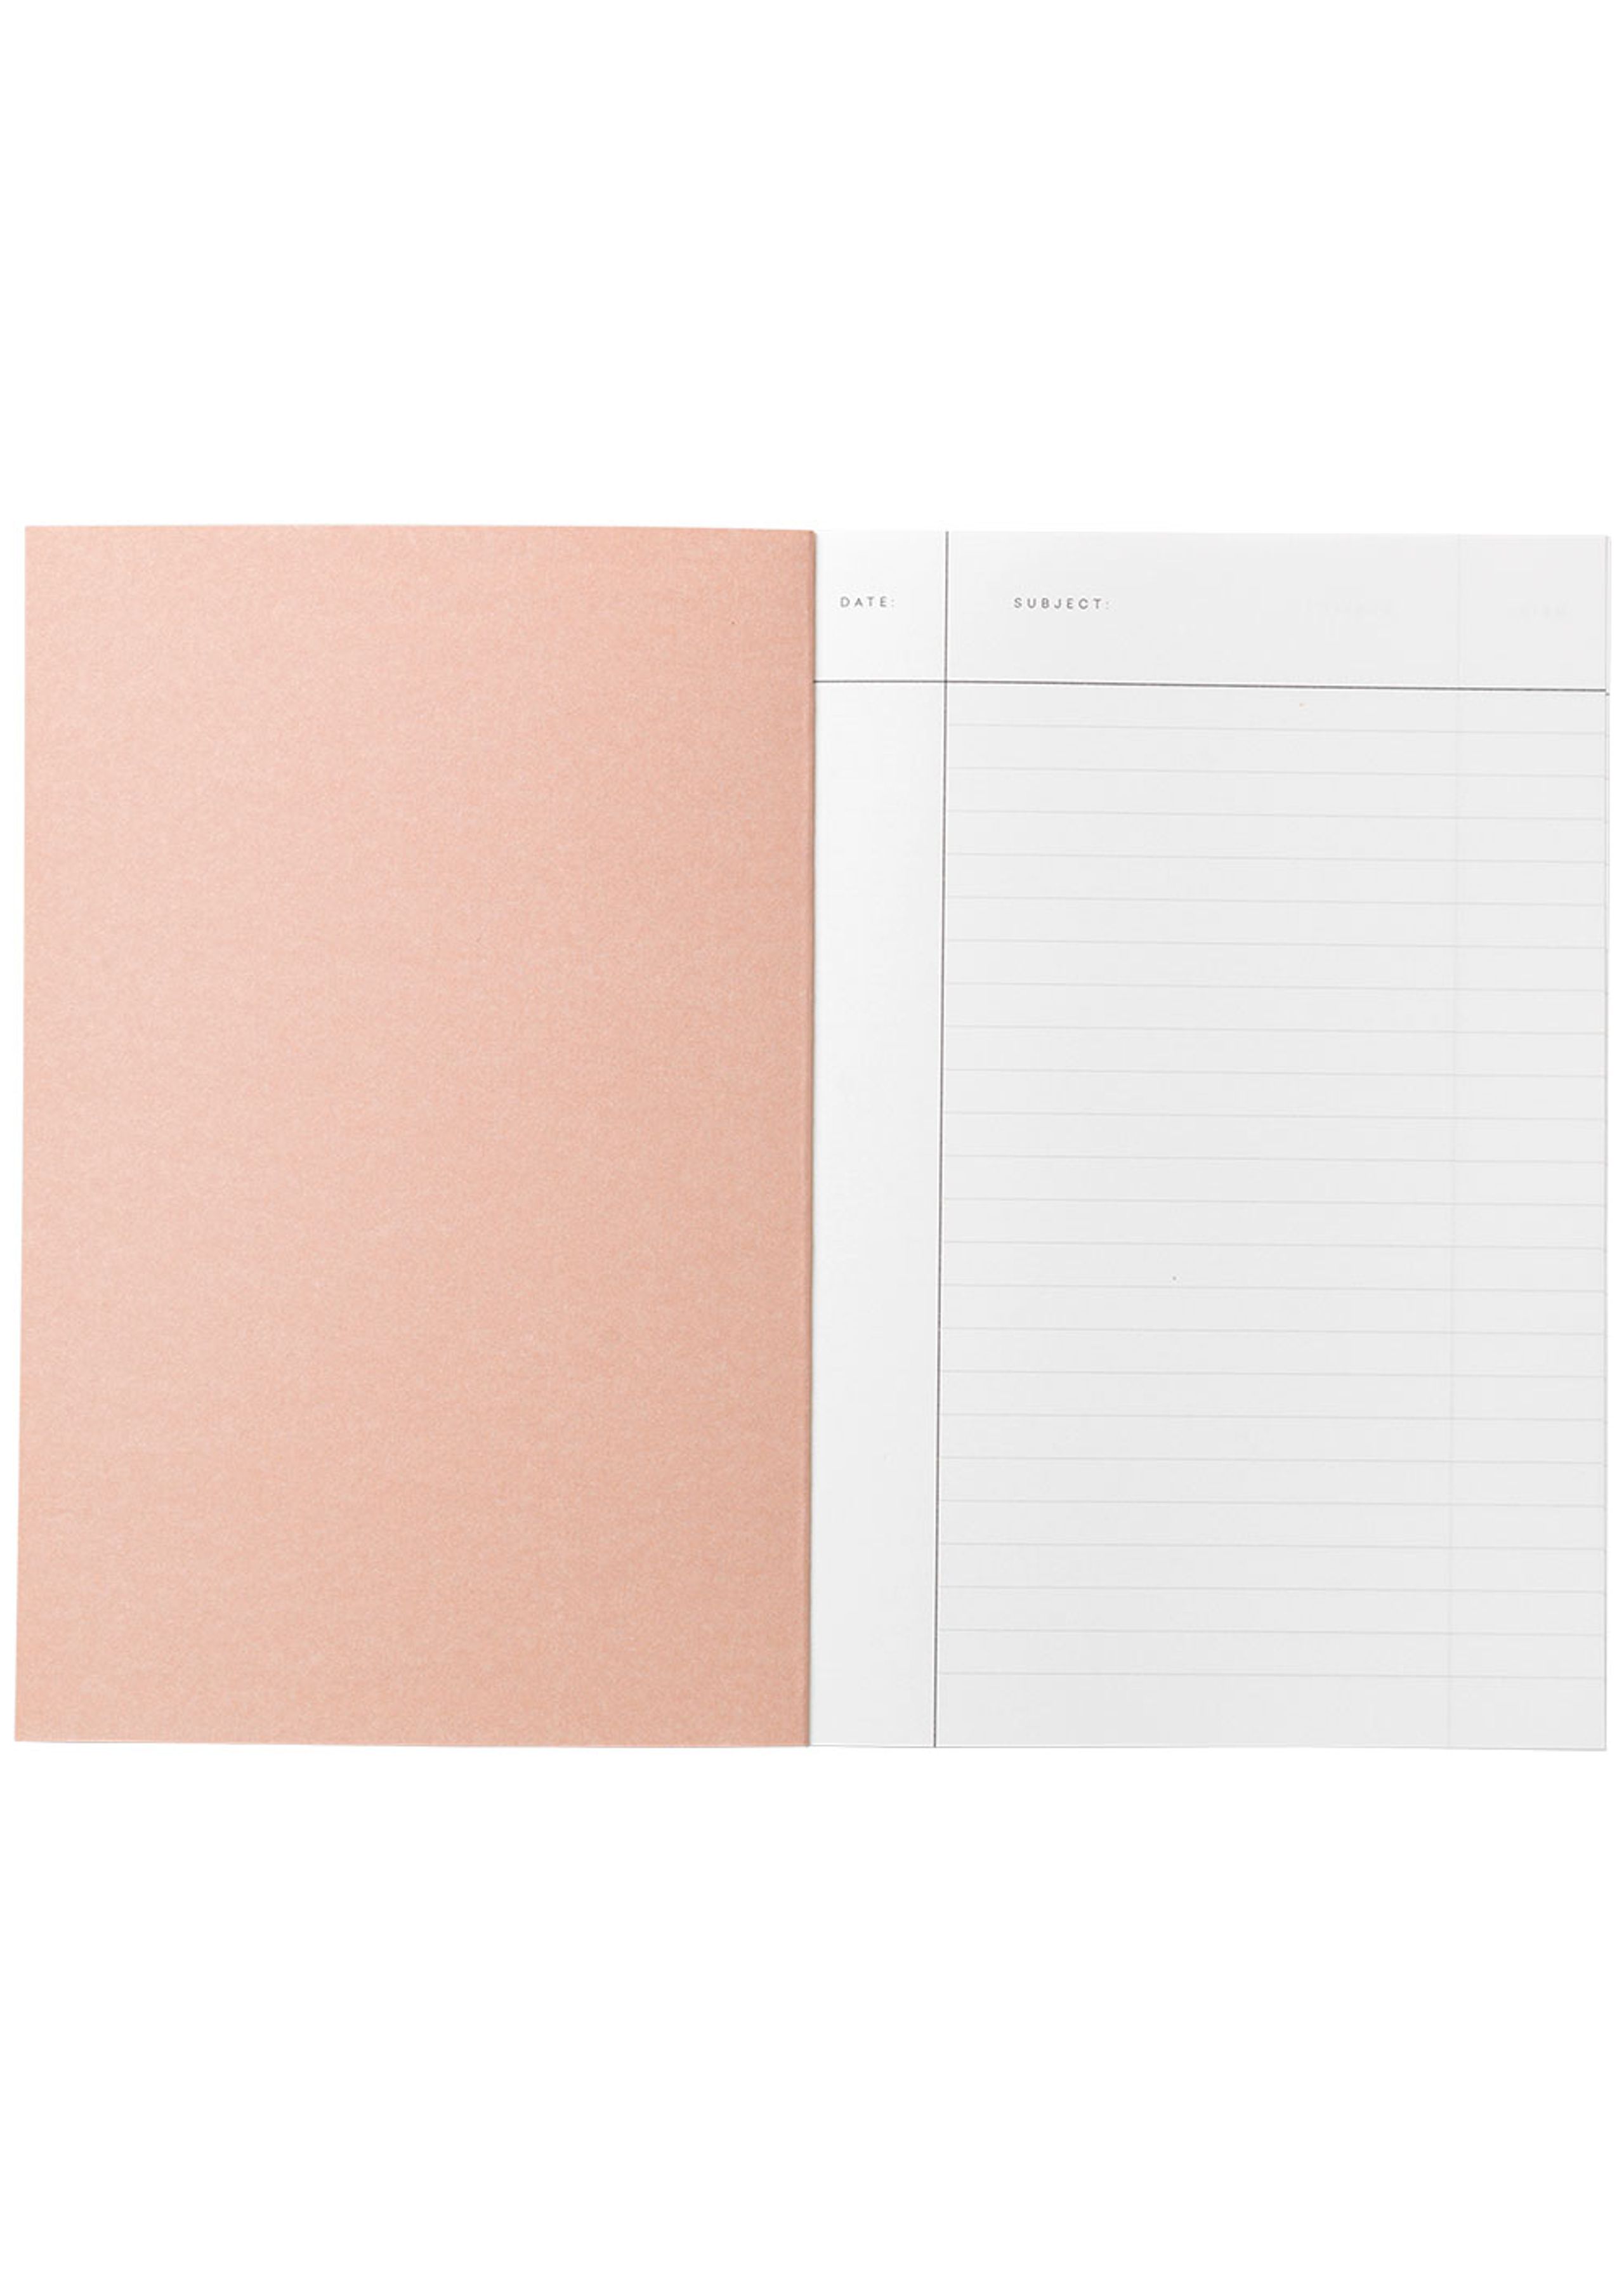 NOTEM - Notizbuch - VITA Notebook  - Small - Bright Red